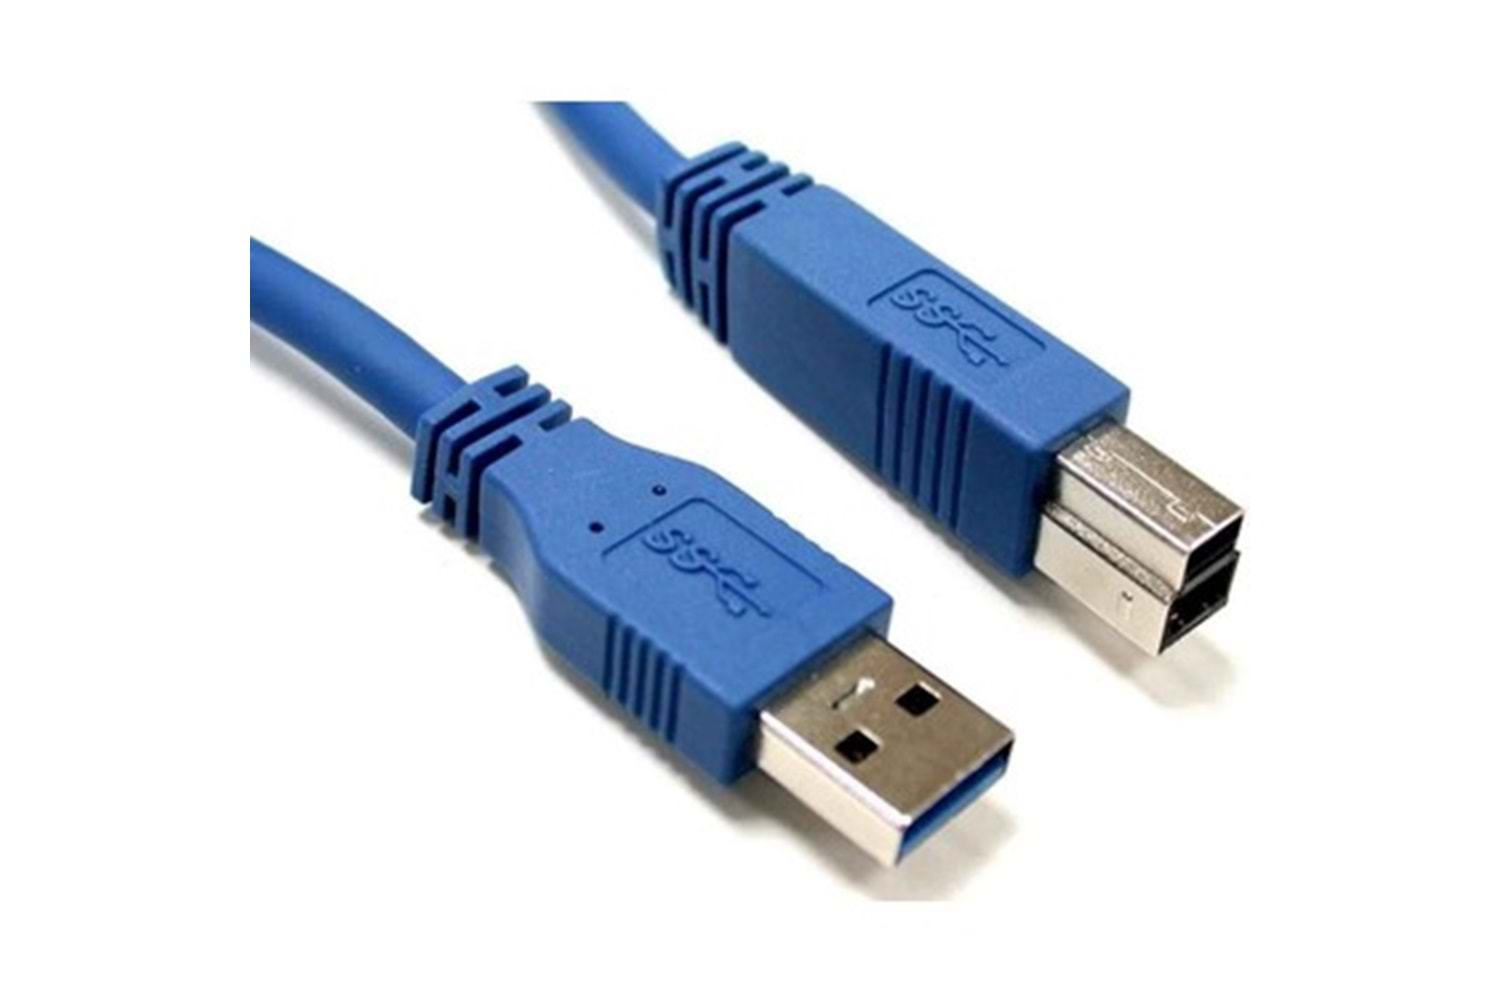 PLATOON PL-5050 1.5 M 3.0 AM-BM USB KABLO